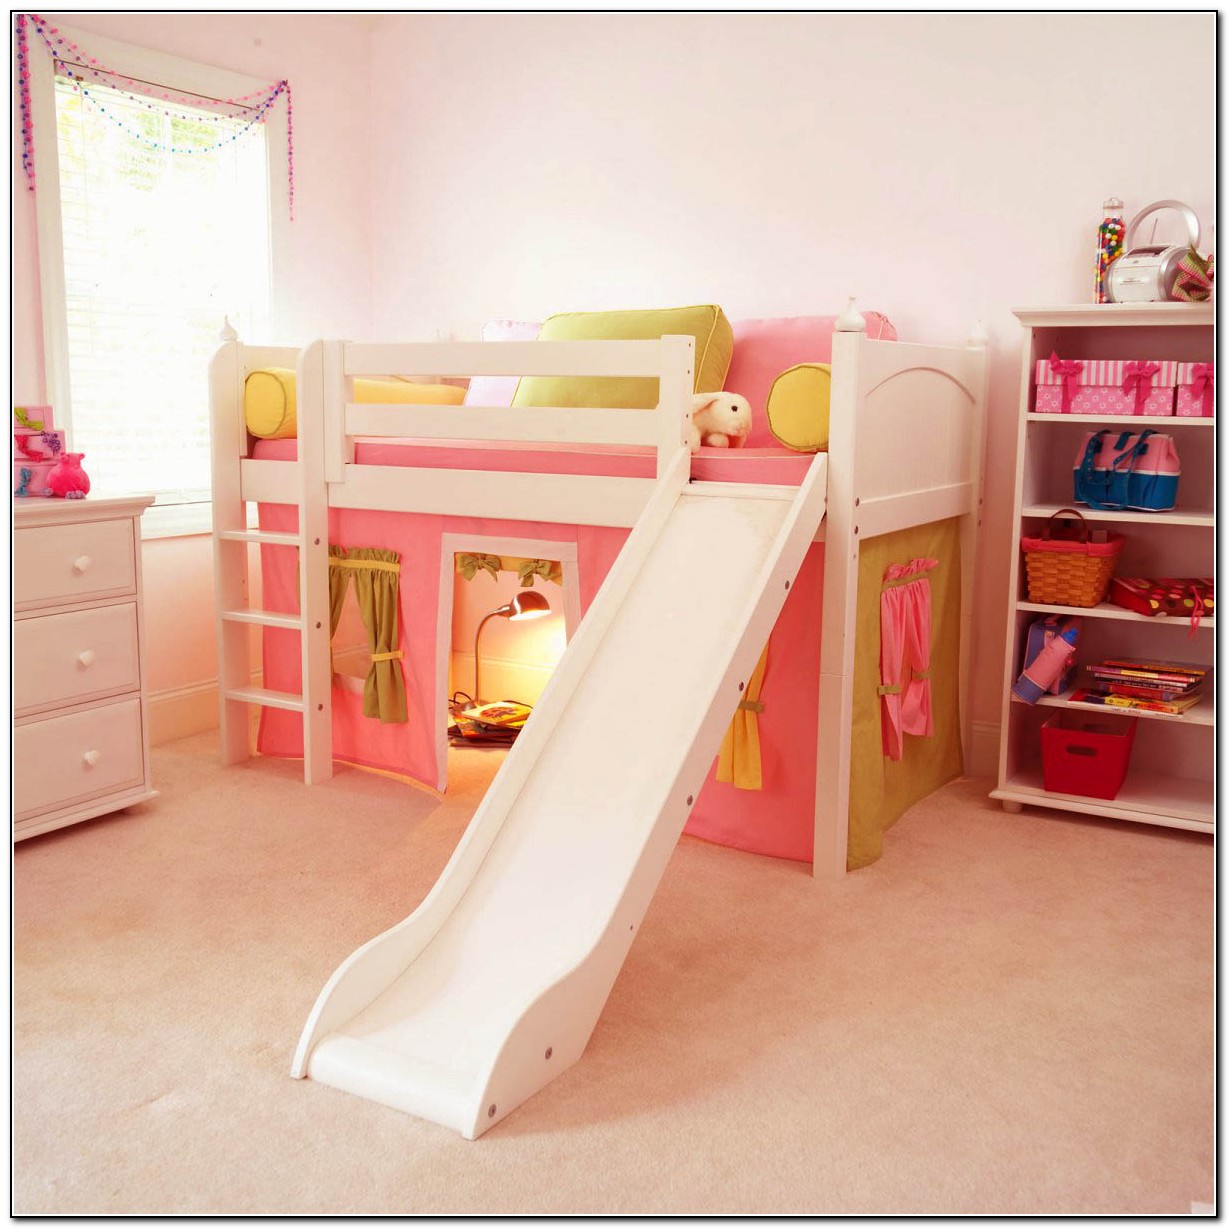 Kids Loft Bed With Slide - Beds : Home Design Ideas #R3nJWlyD2e6025